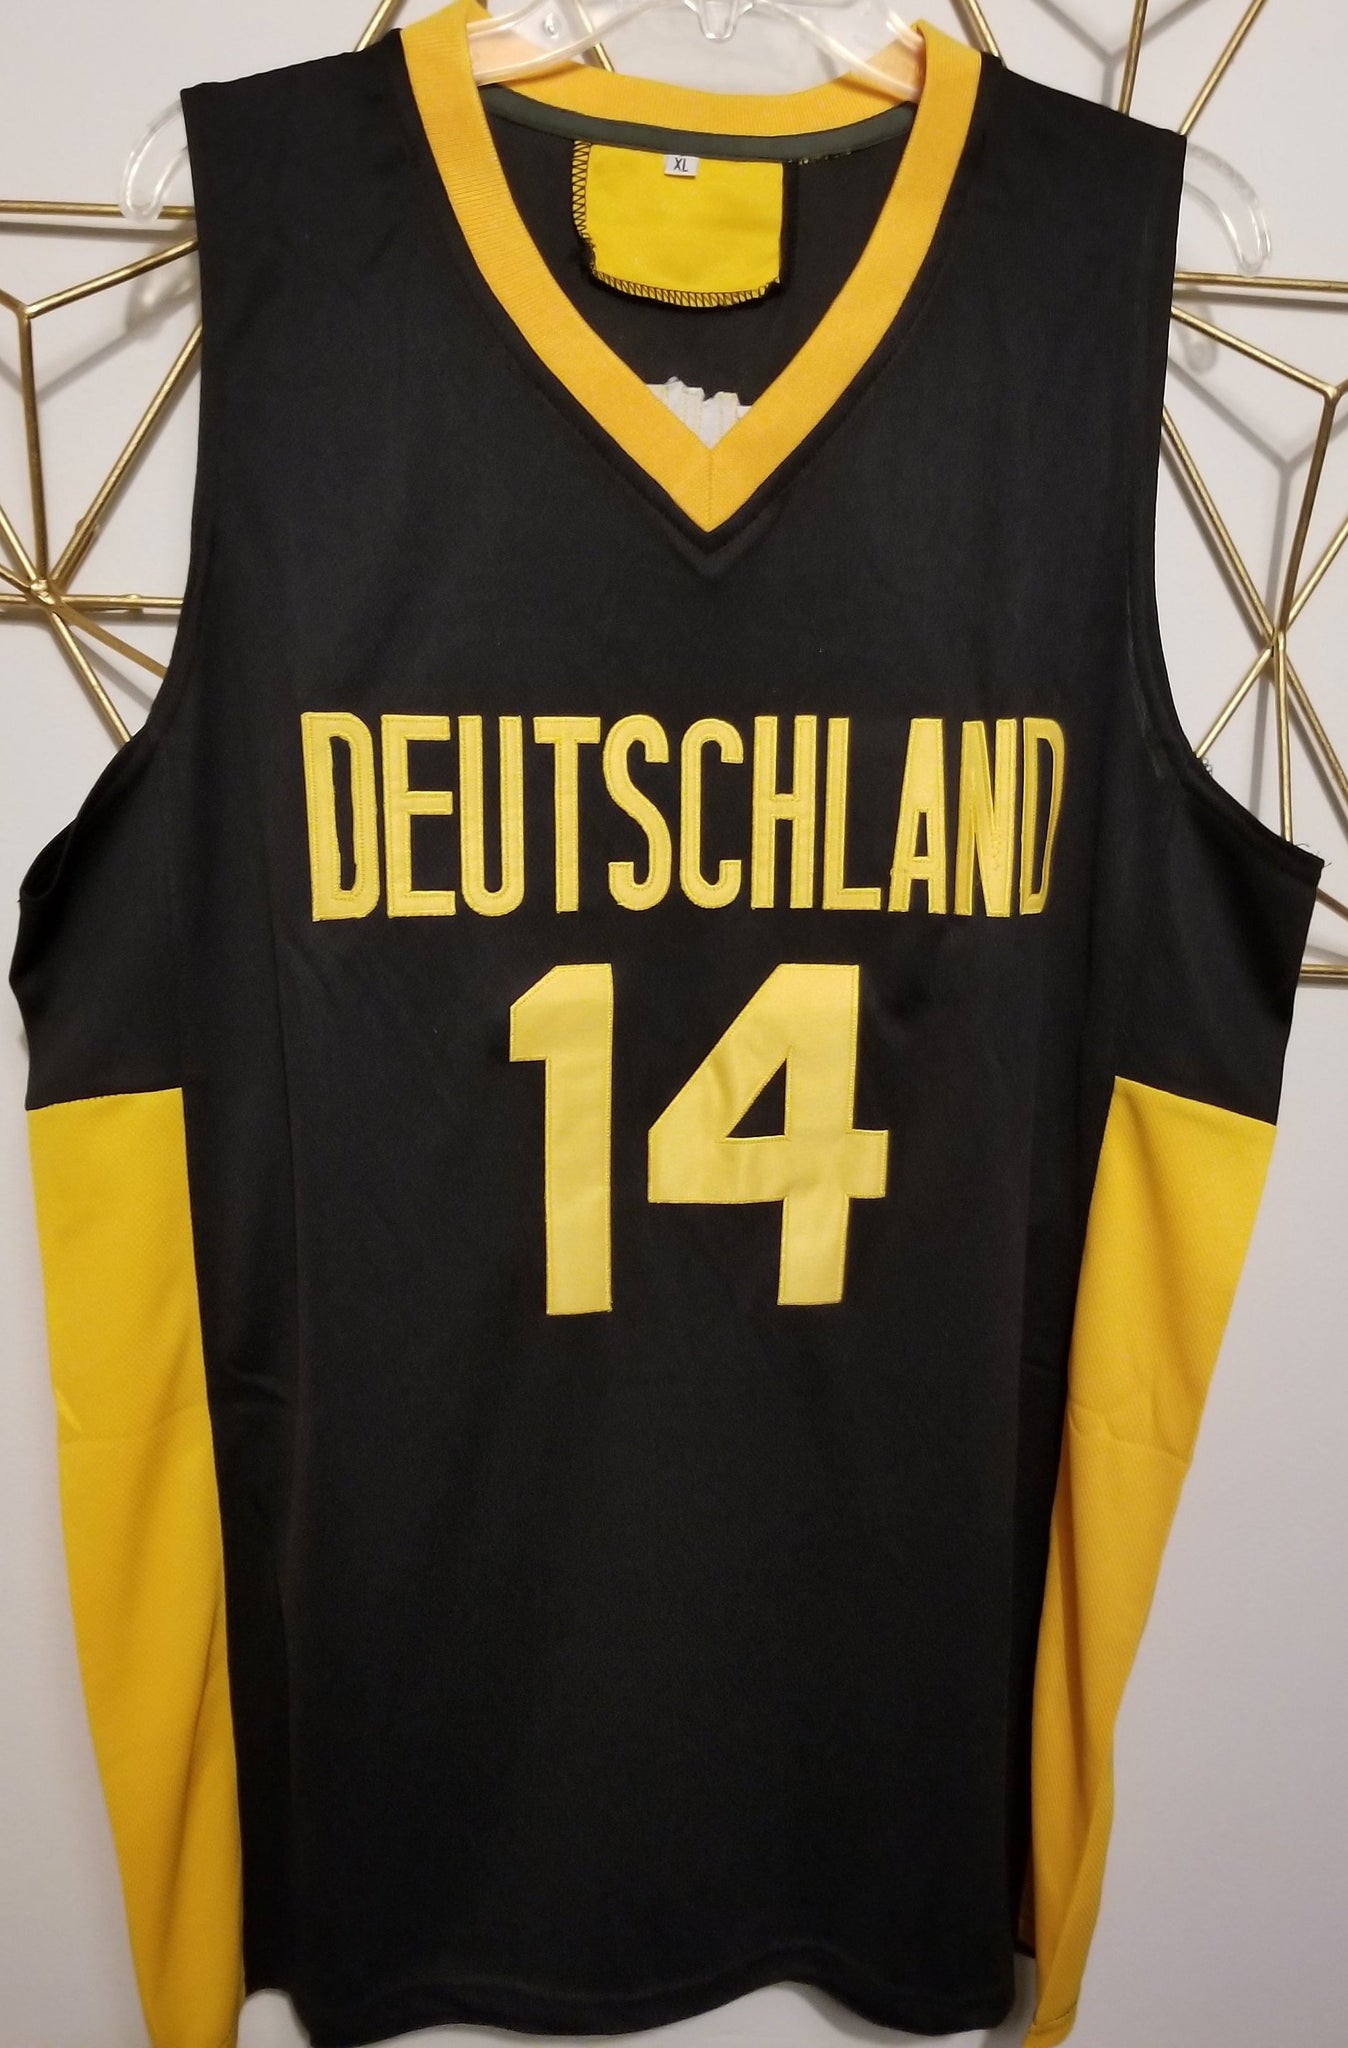 germany basketball jersey